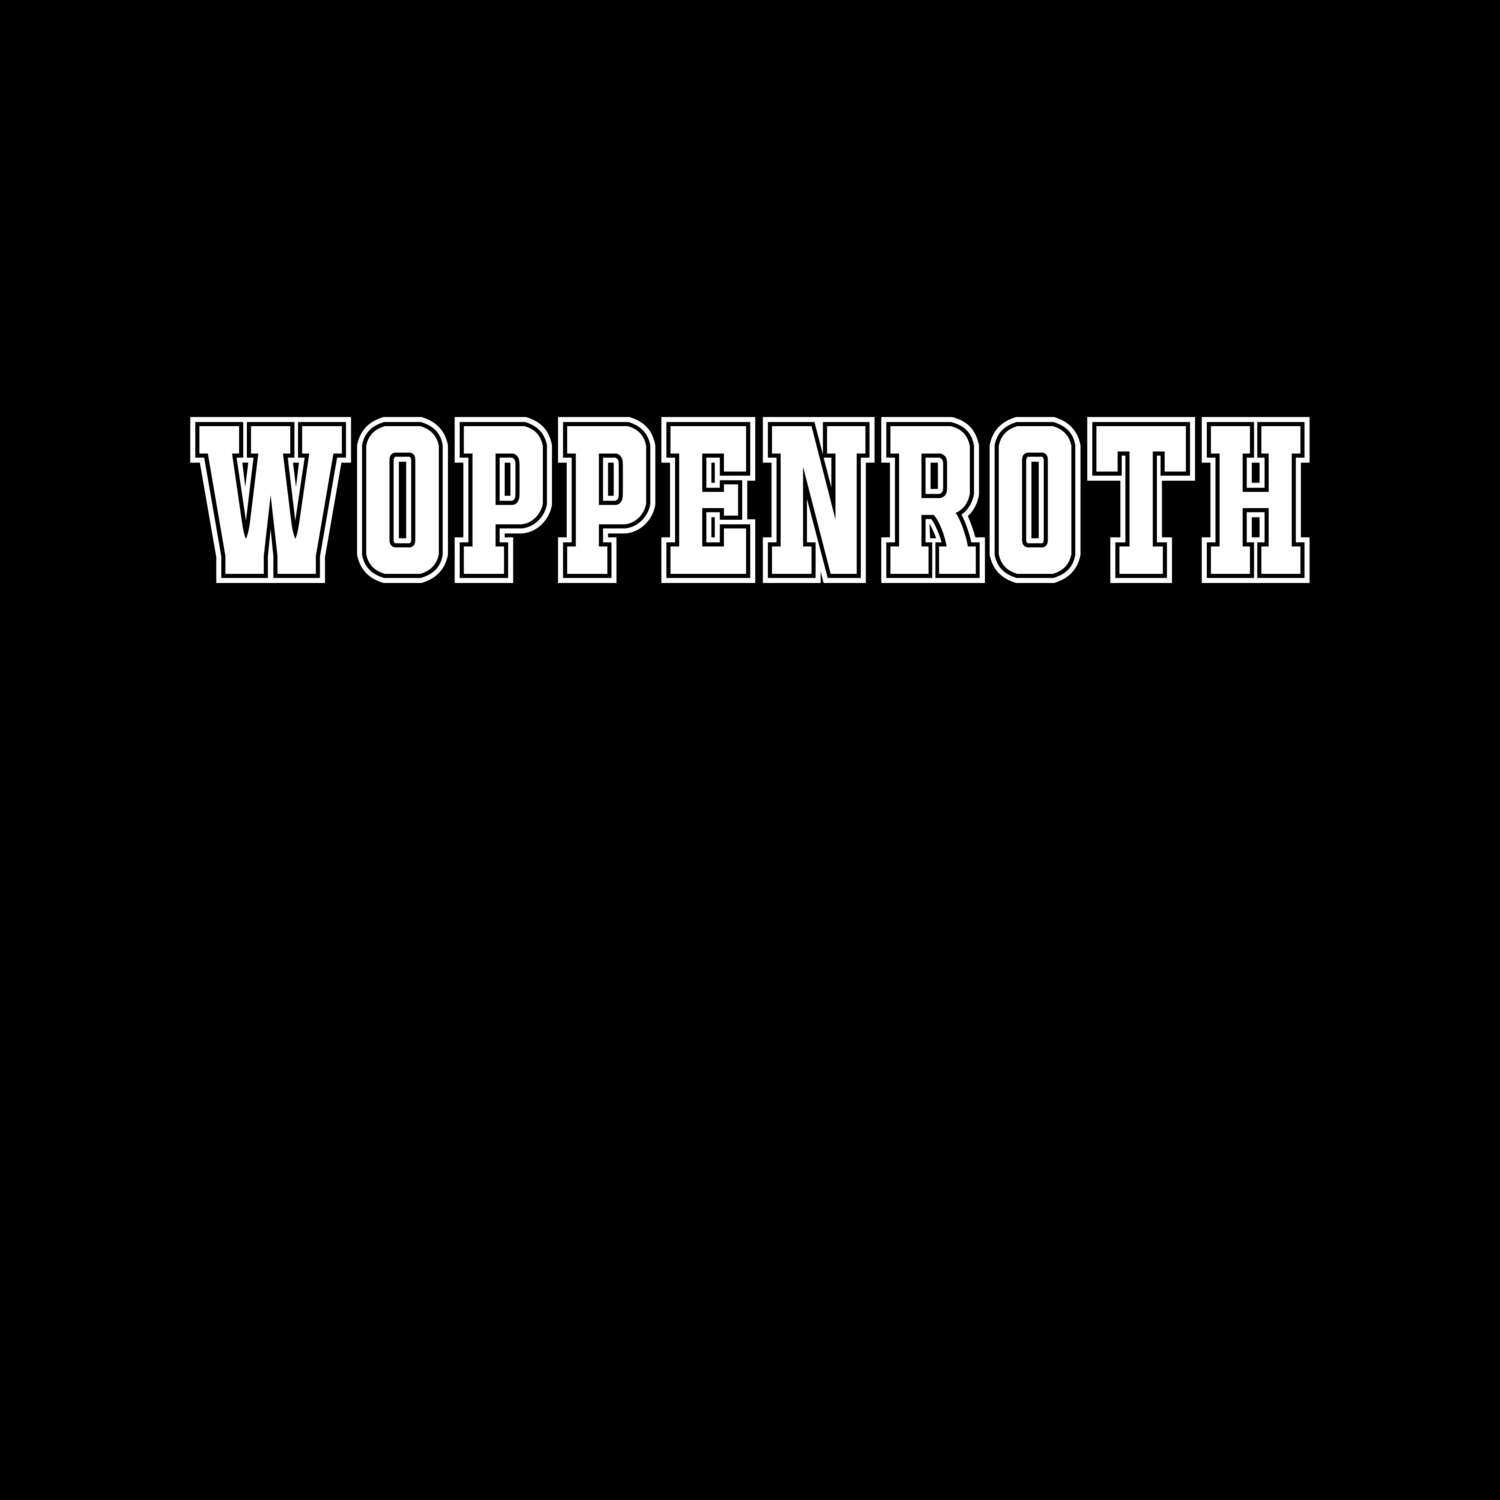 Woppenroth T-Shirt »Classic«